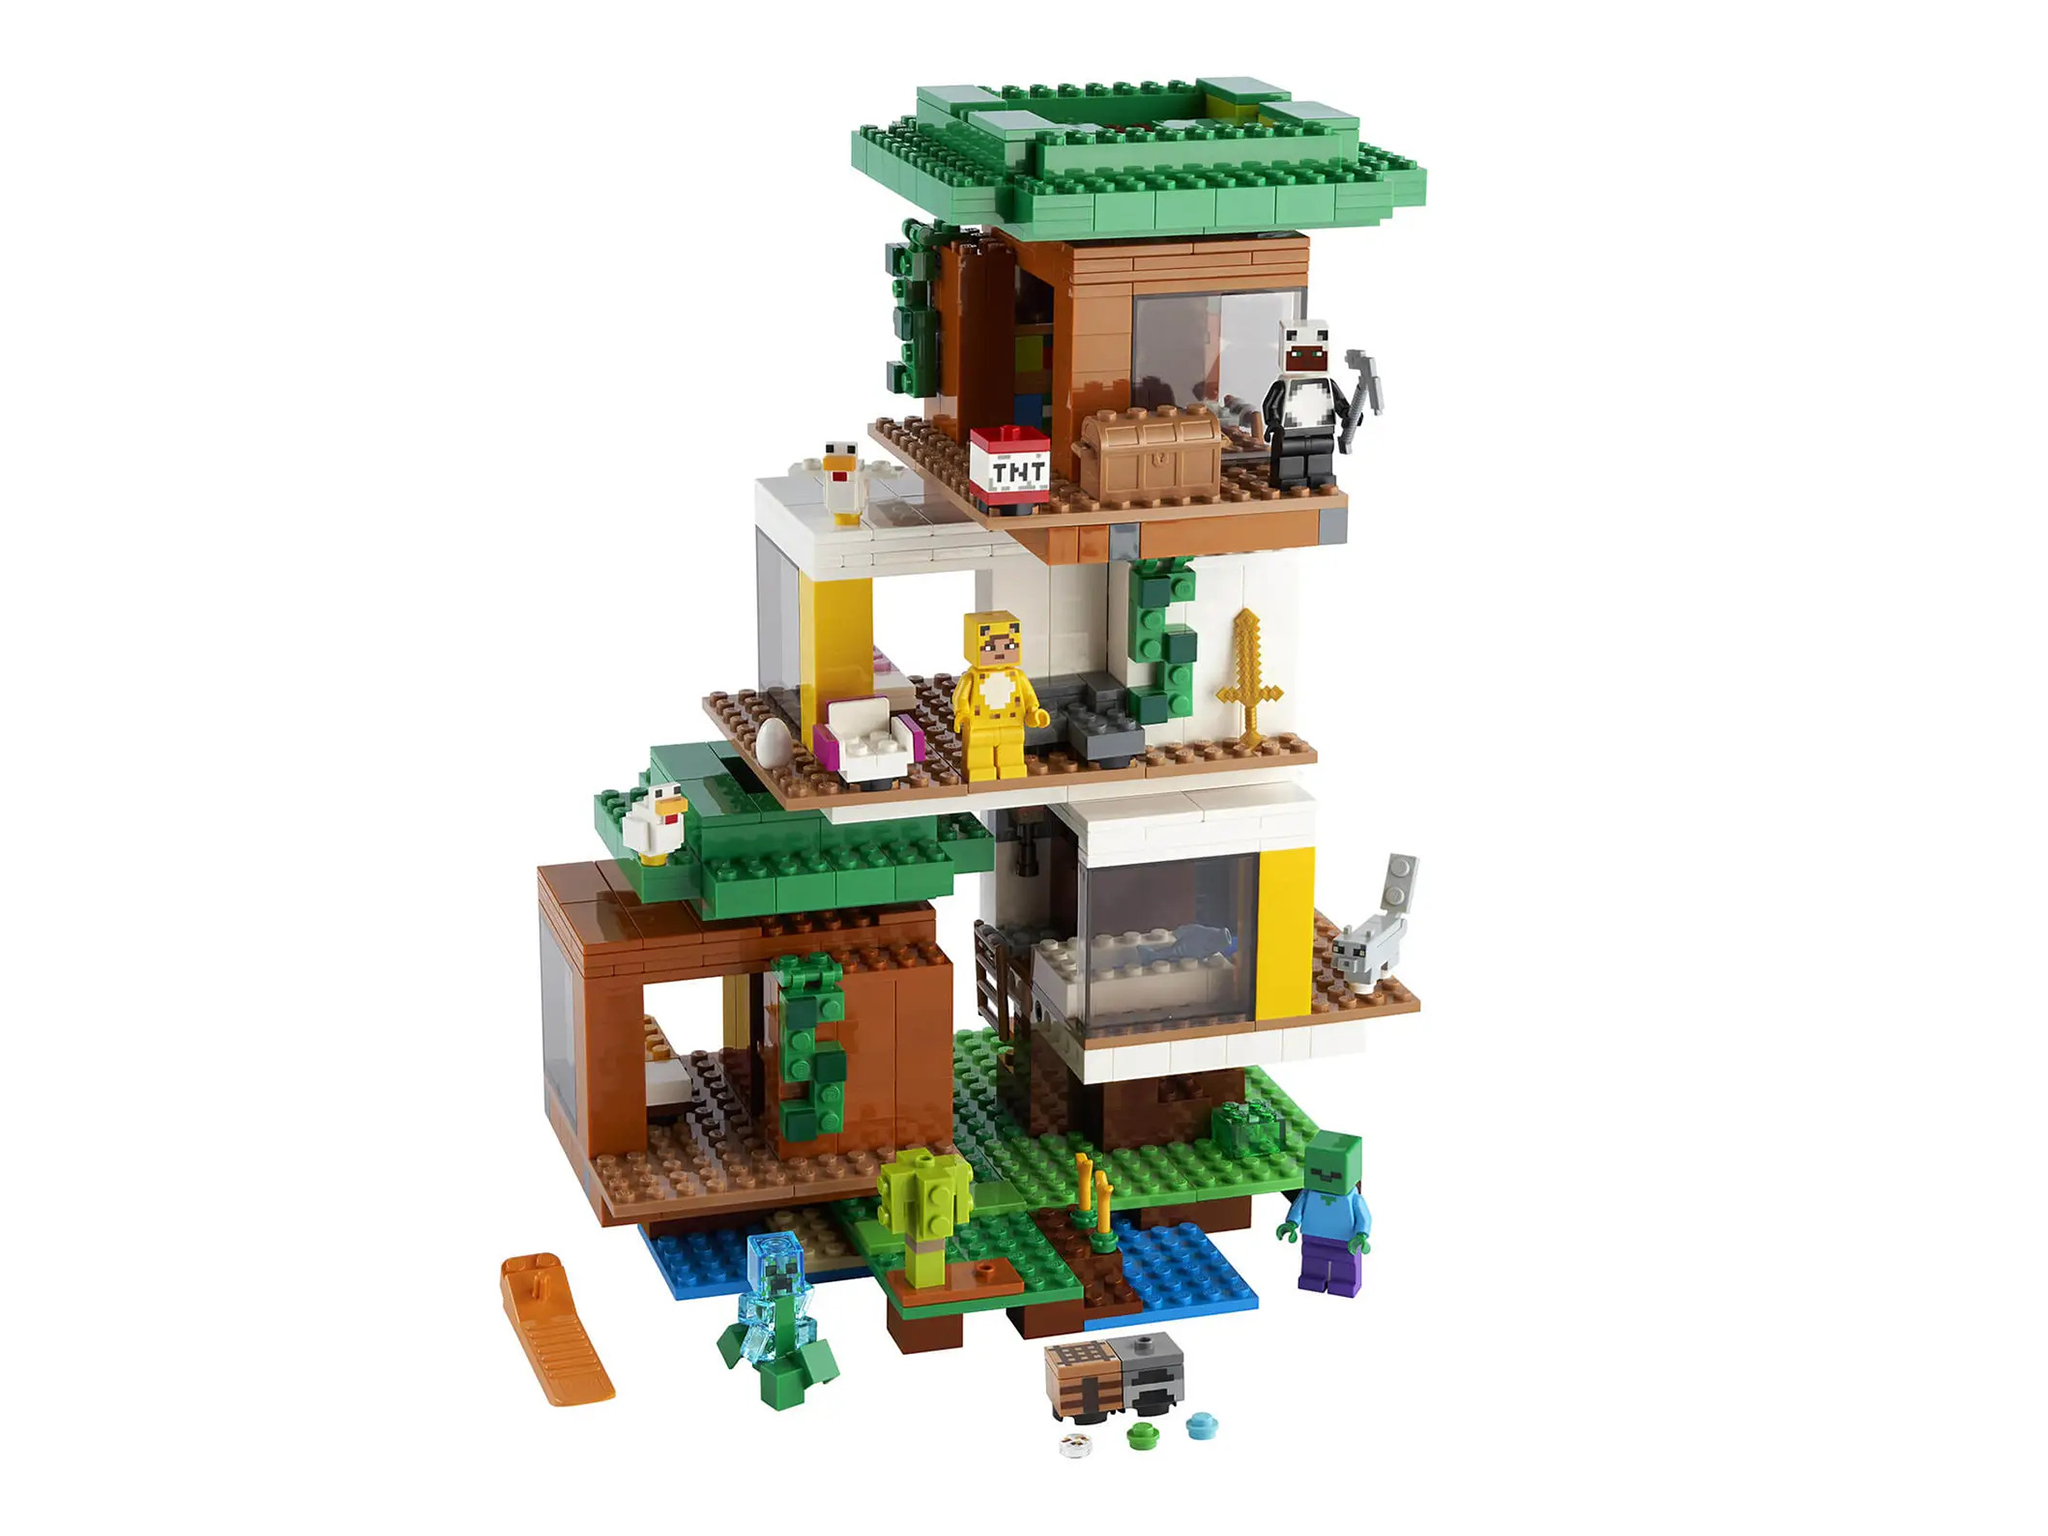 Best Lego Sets For Kids 22 Marvel Harry Potter Sets And More The Independent